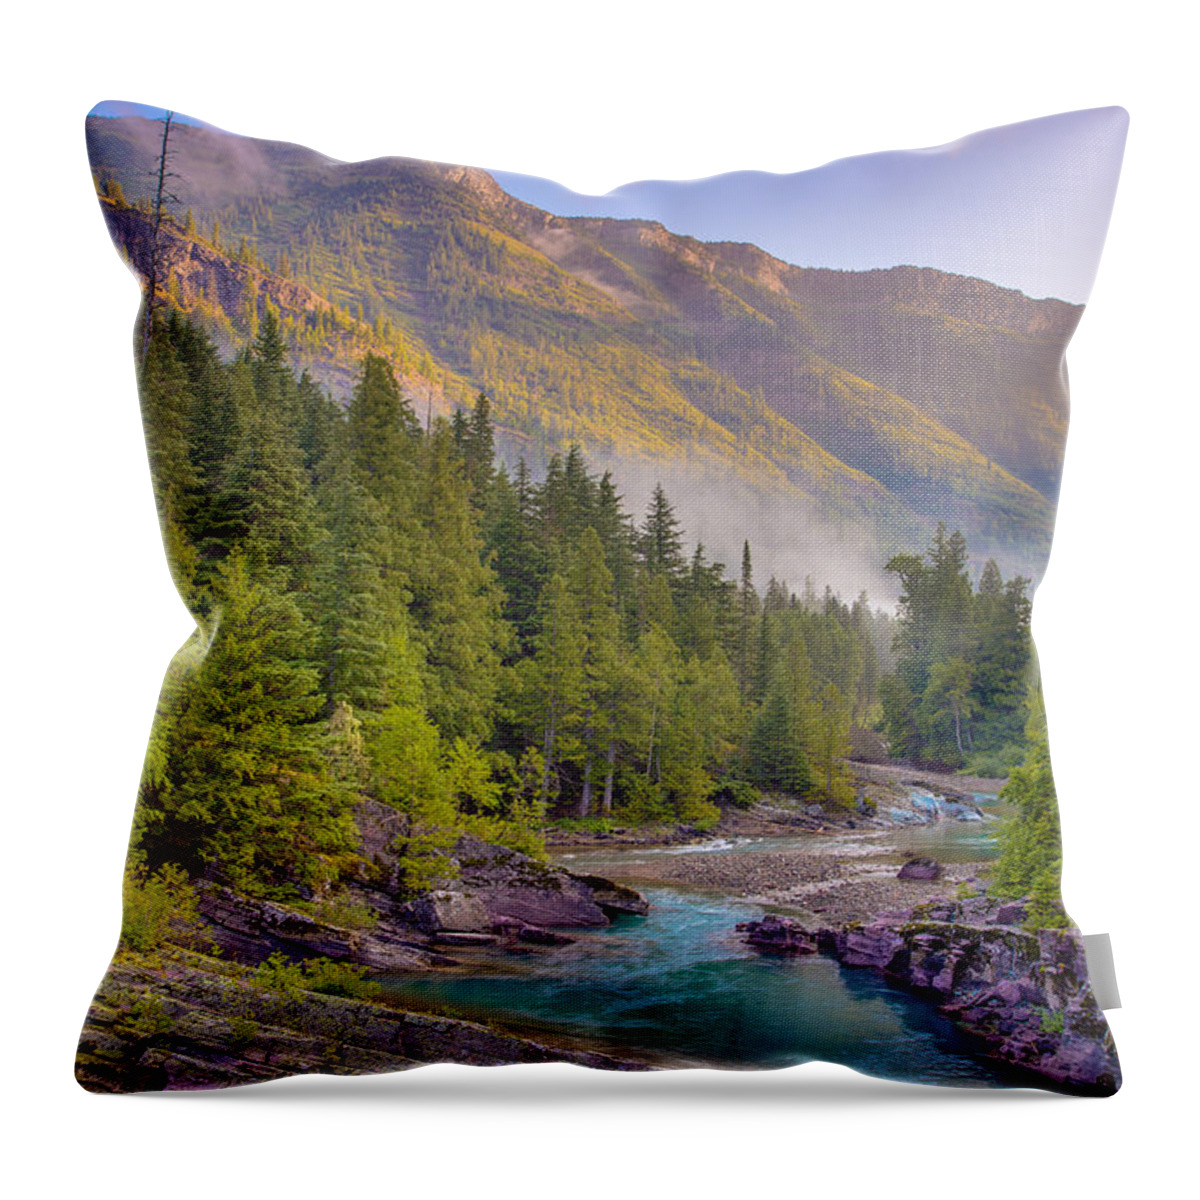 Glacier National Park Throw Pillow featuring the photograph McDonald Creek by Adam Mateo Fierro